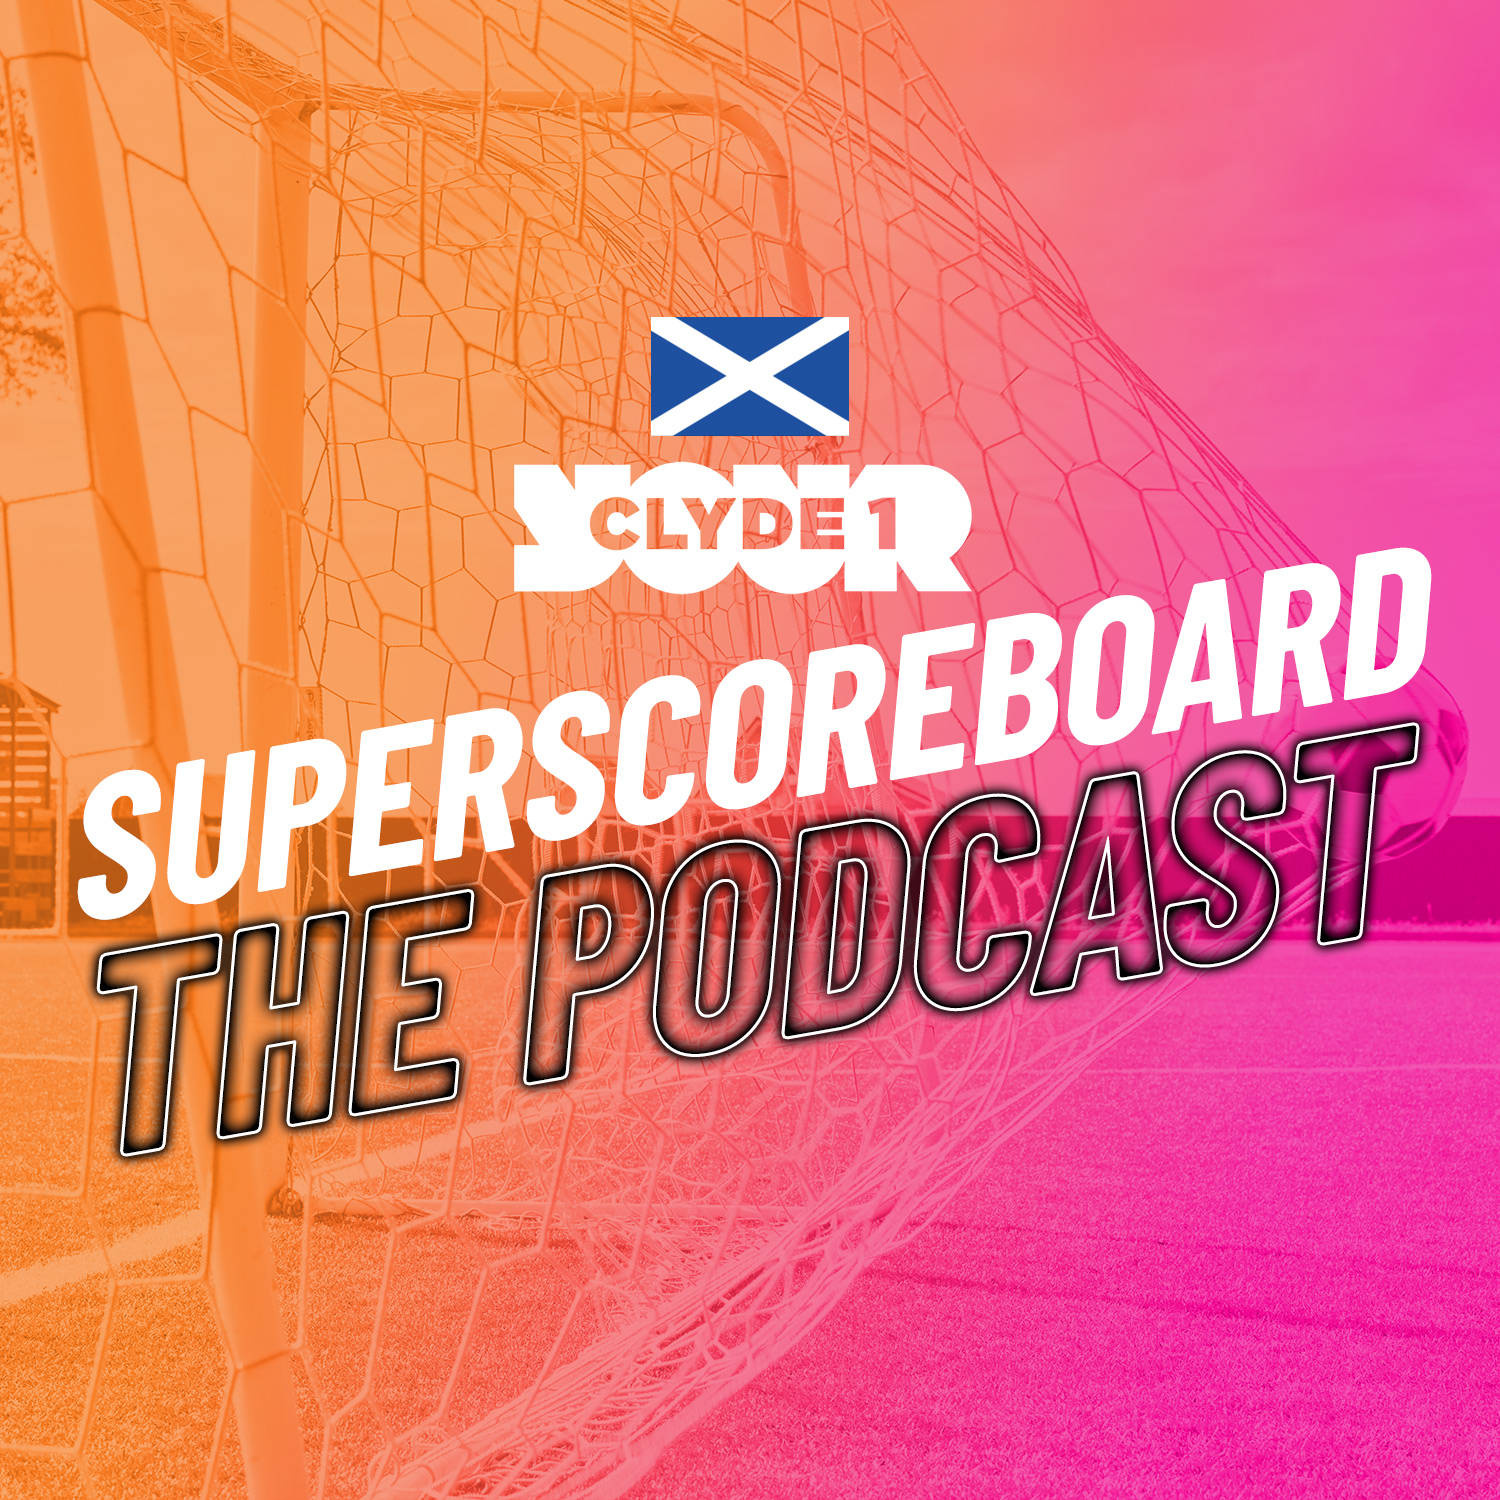 Saturday 9th December Clyde 1 Superscoreboard – Part 2